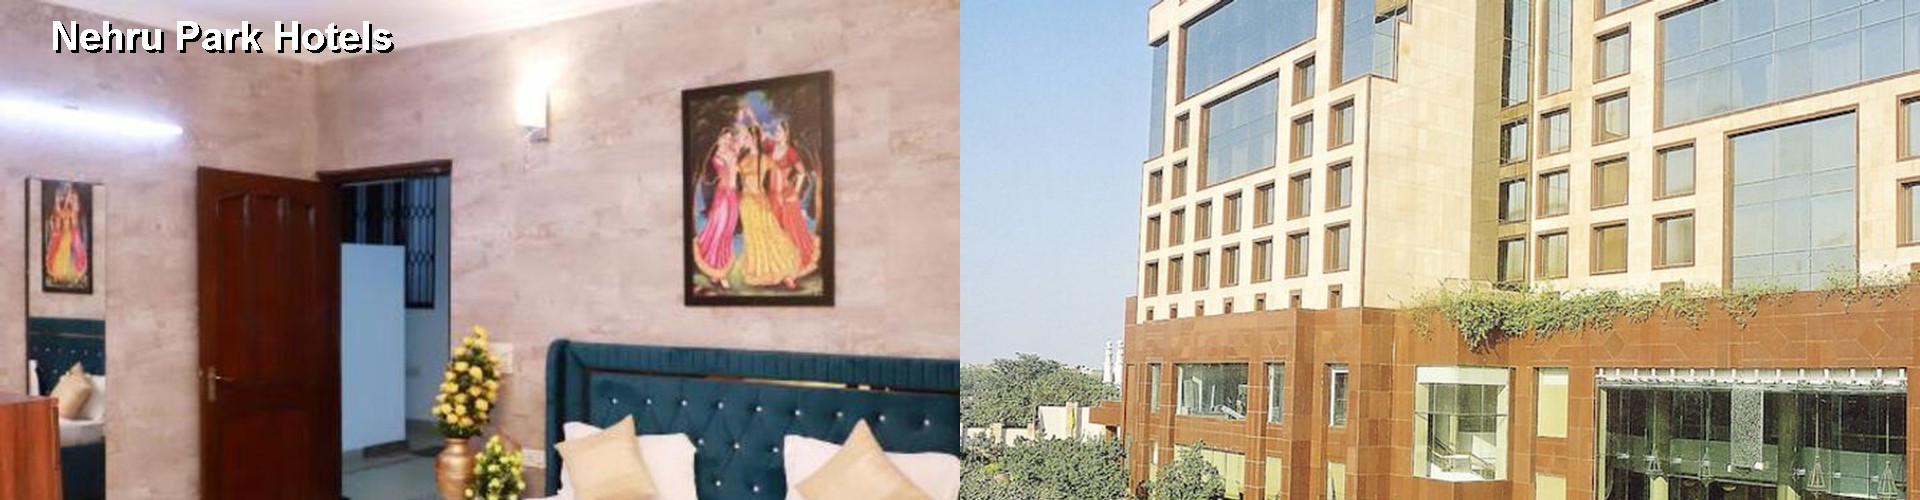 5 Best Hotels near Nehru Park